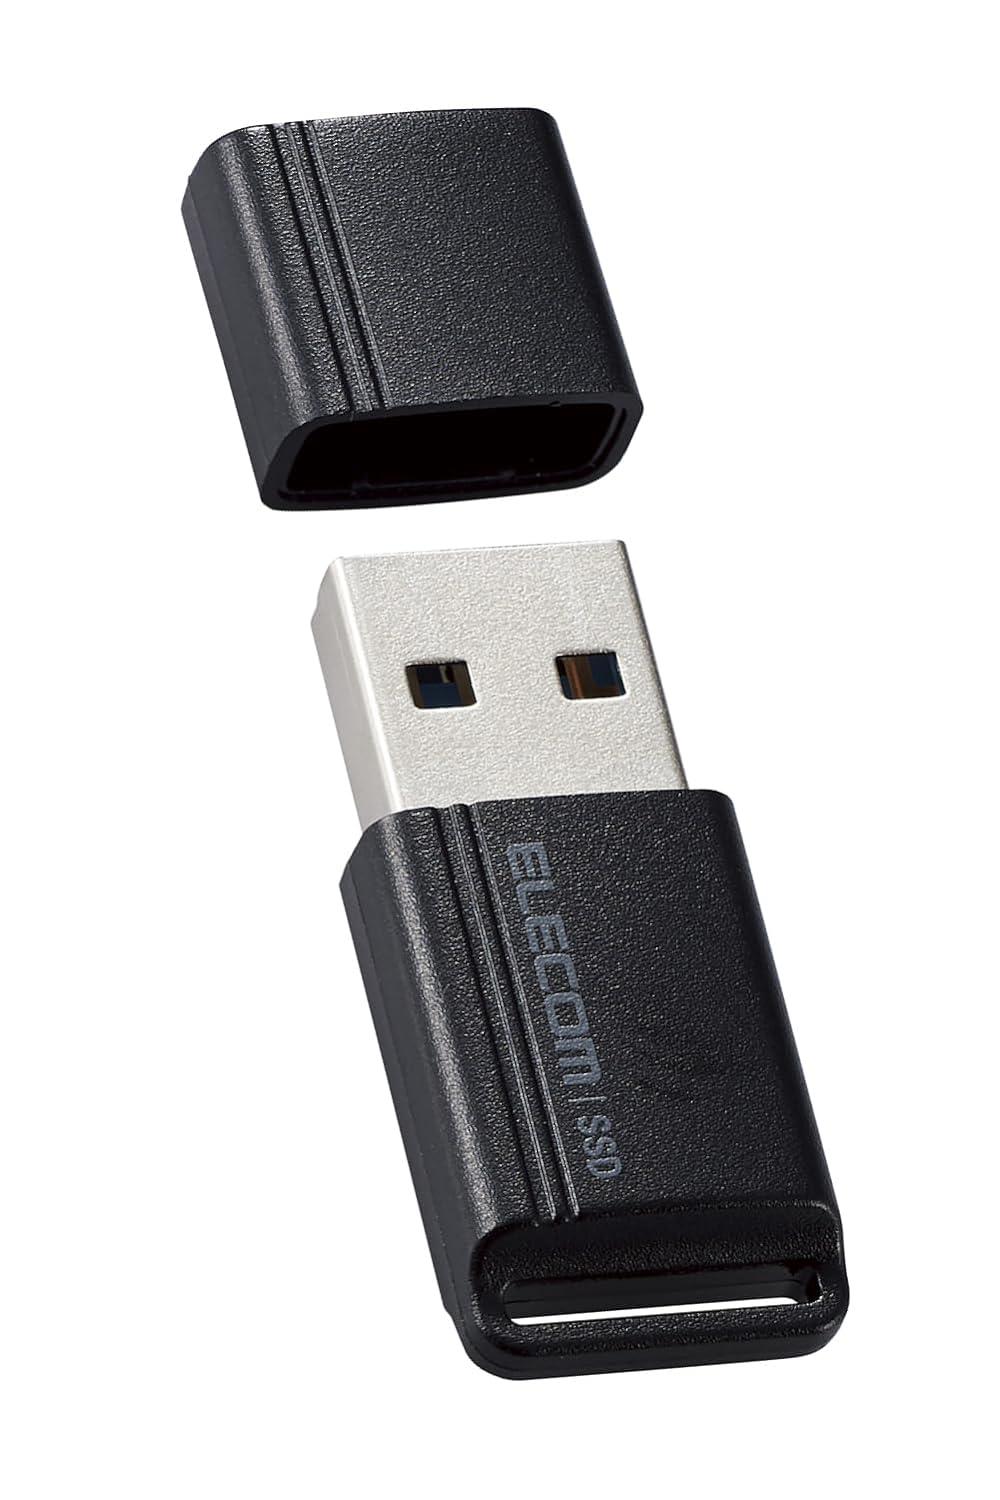 OtSSD/|[^u/USB3.2(Gen1)/^USB^/250GB/ubN(ESD-EXS0250GBK) ELECOM GR